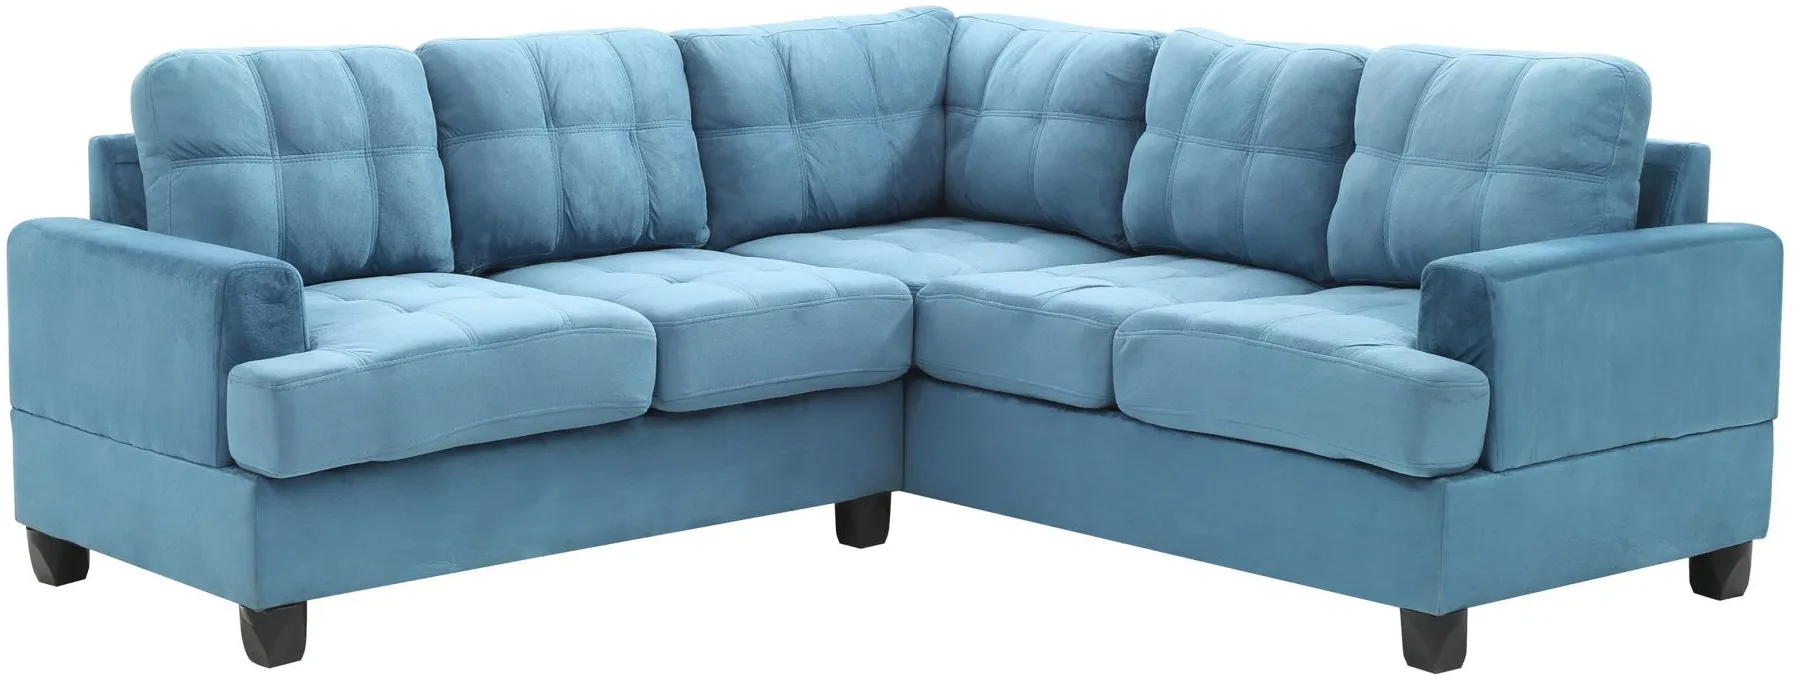 Sandridge 3-pc. Sectional Sofa in Aqua by Glory Furniture